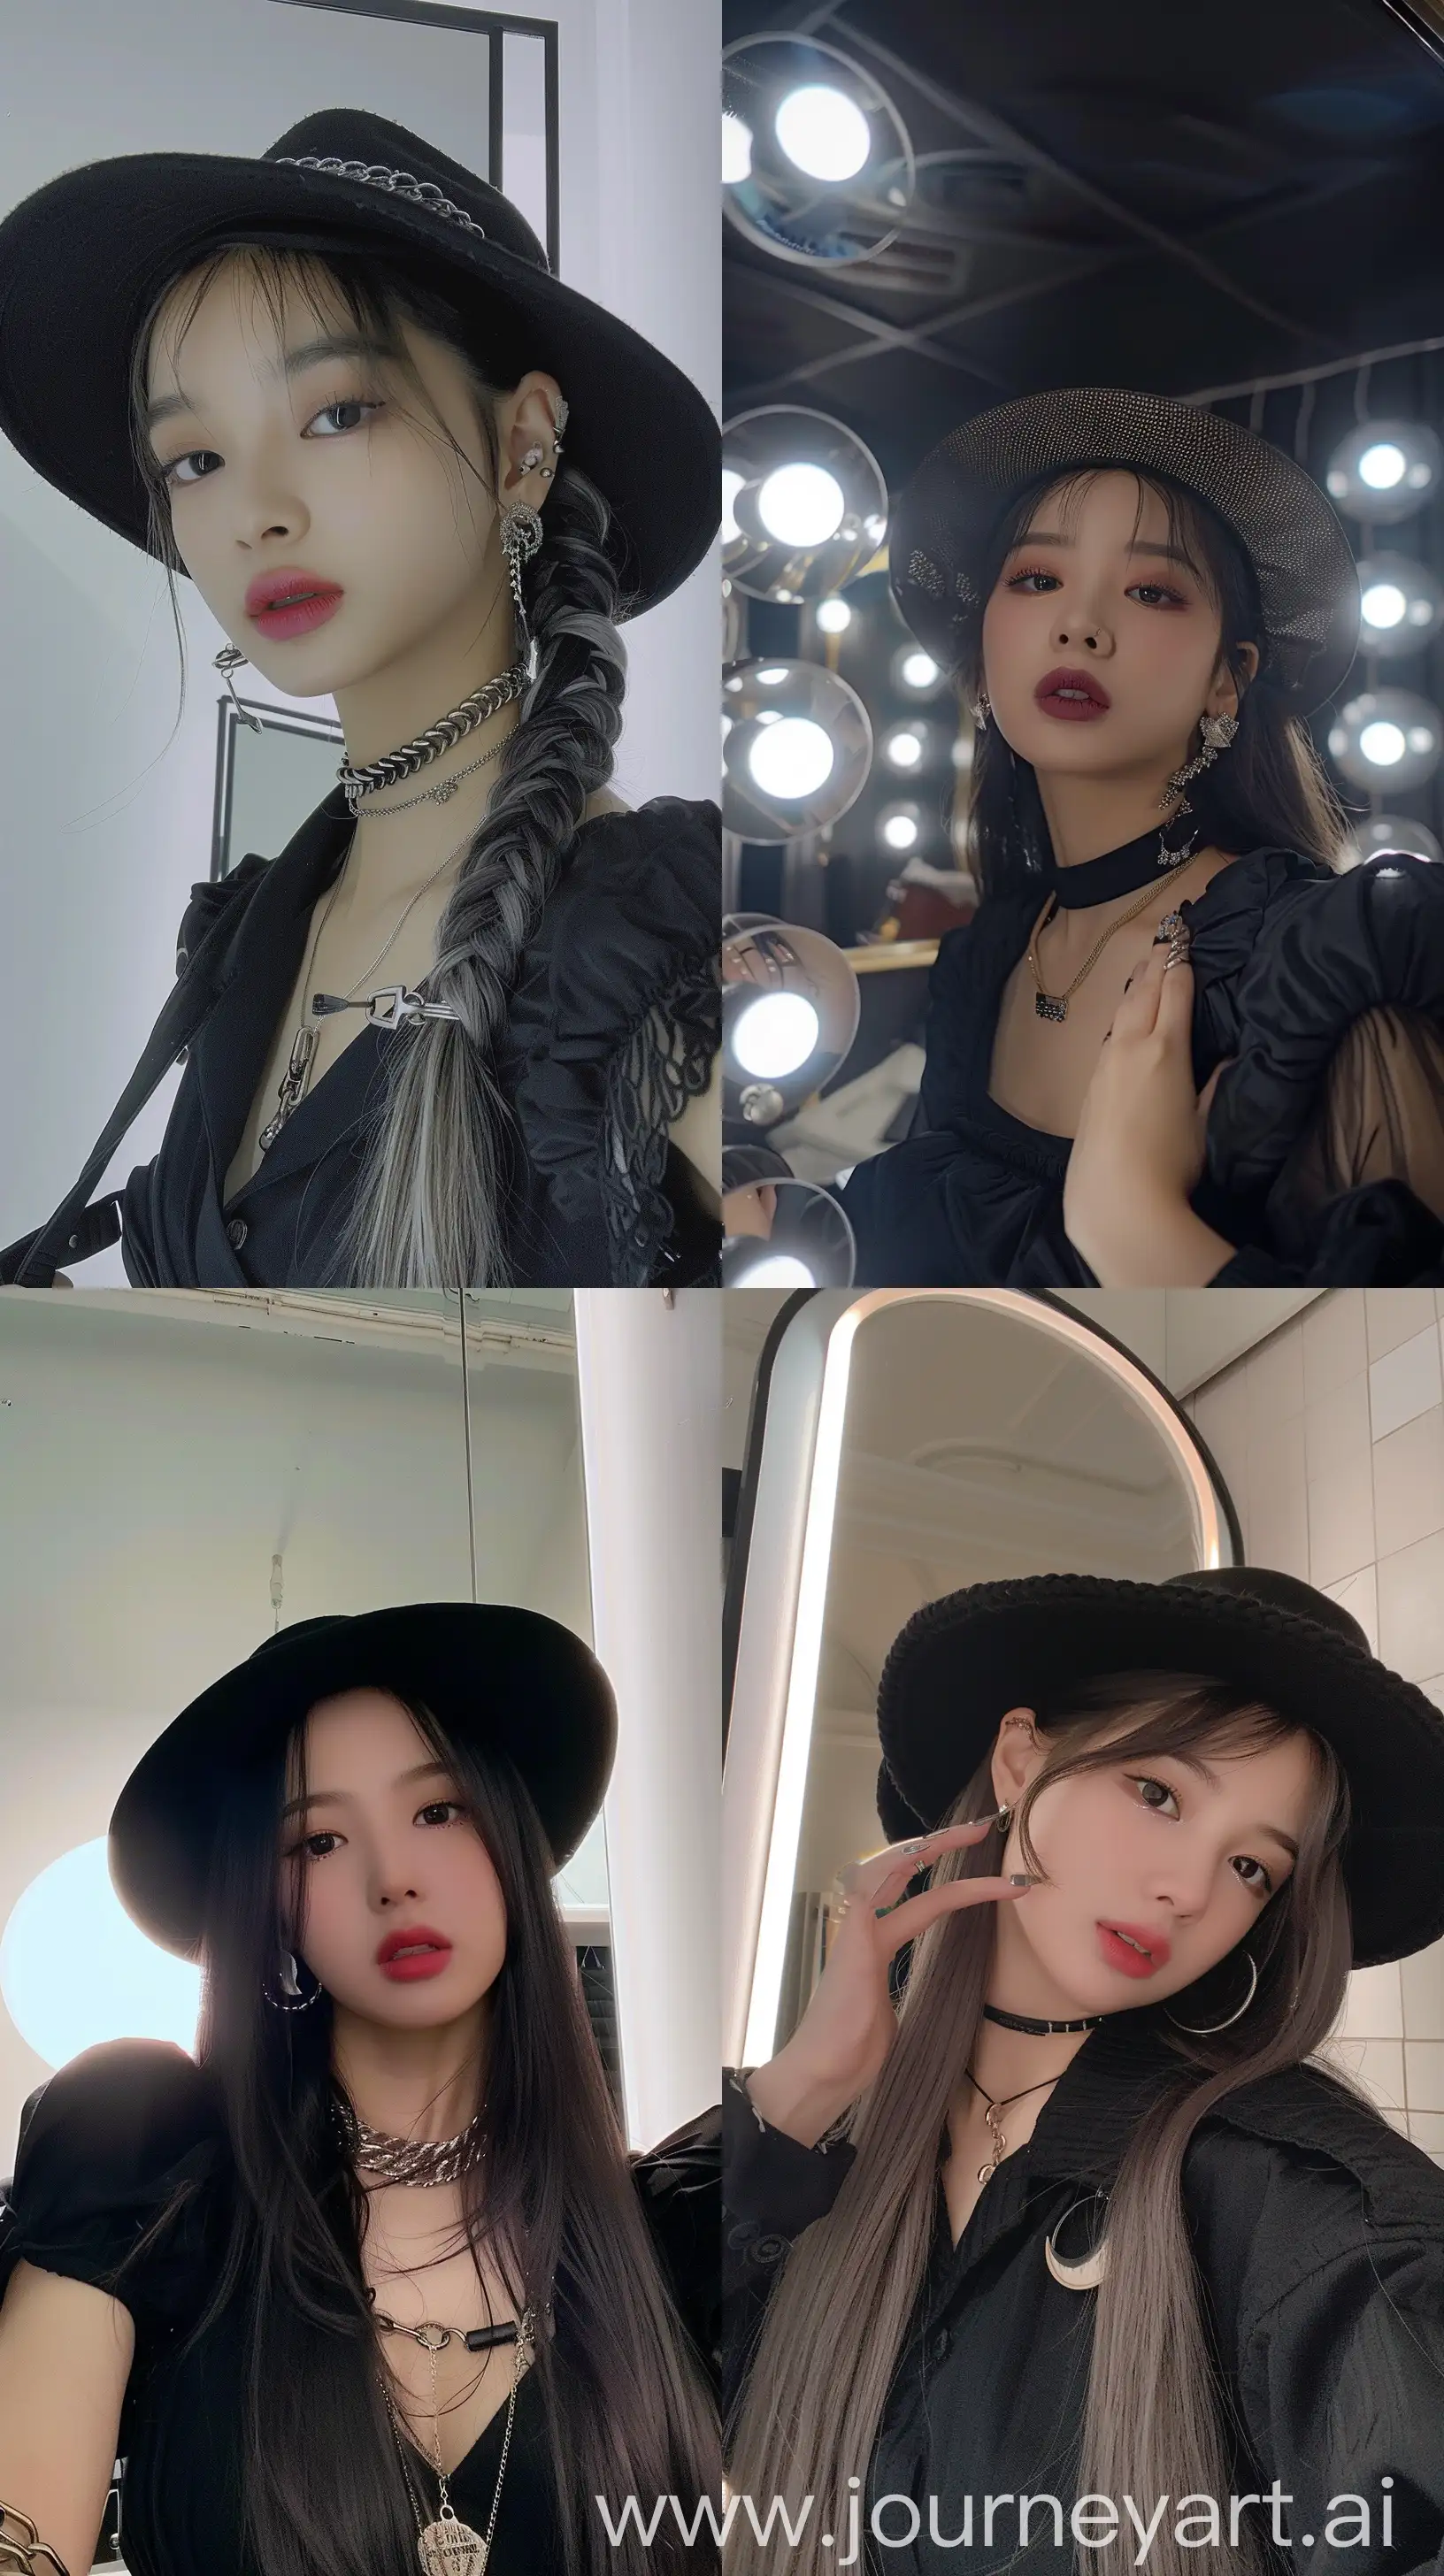 Blackpinks-Jennie-Stunning-Mirror-Selfie-in-Stylish-Black-Attire